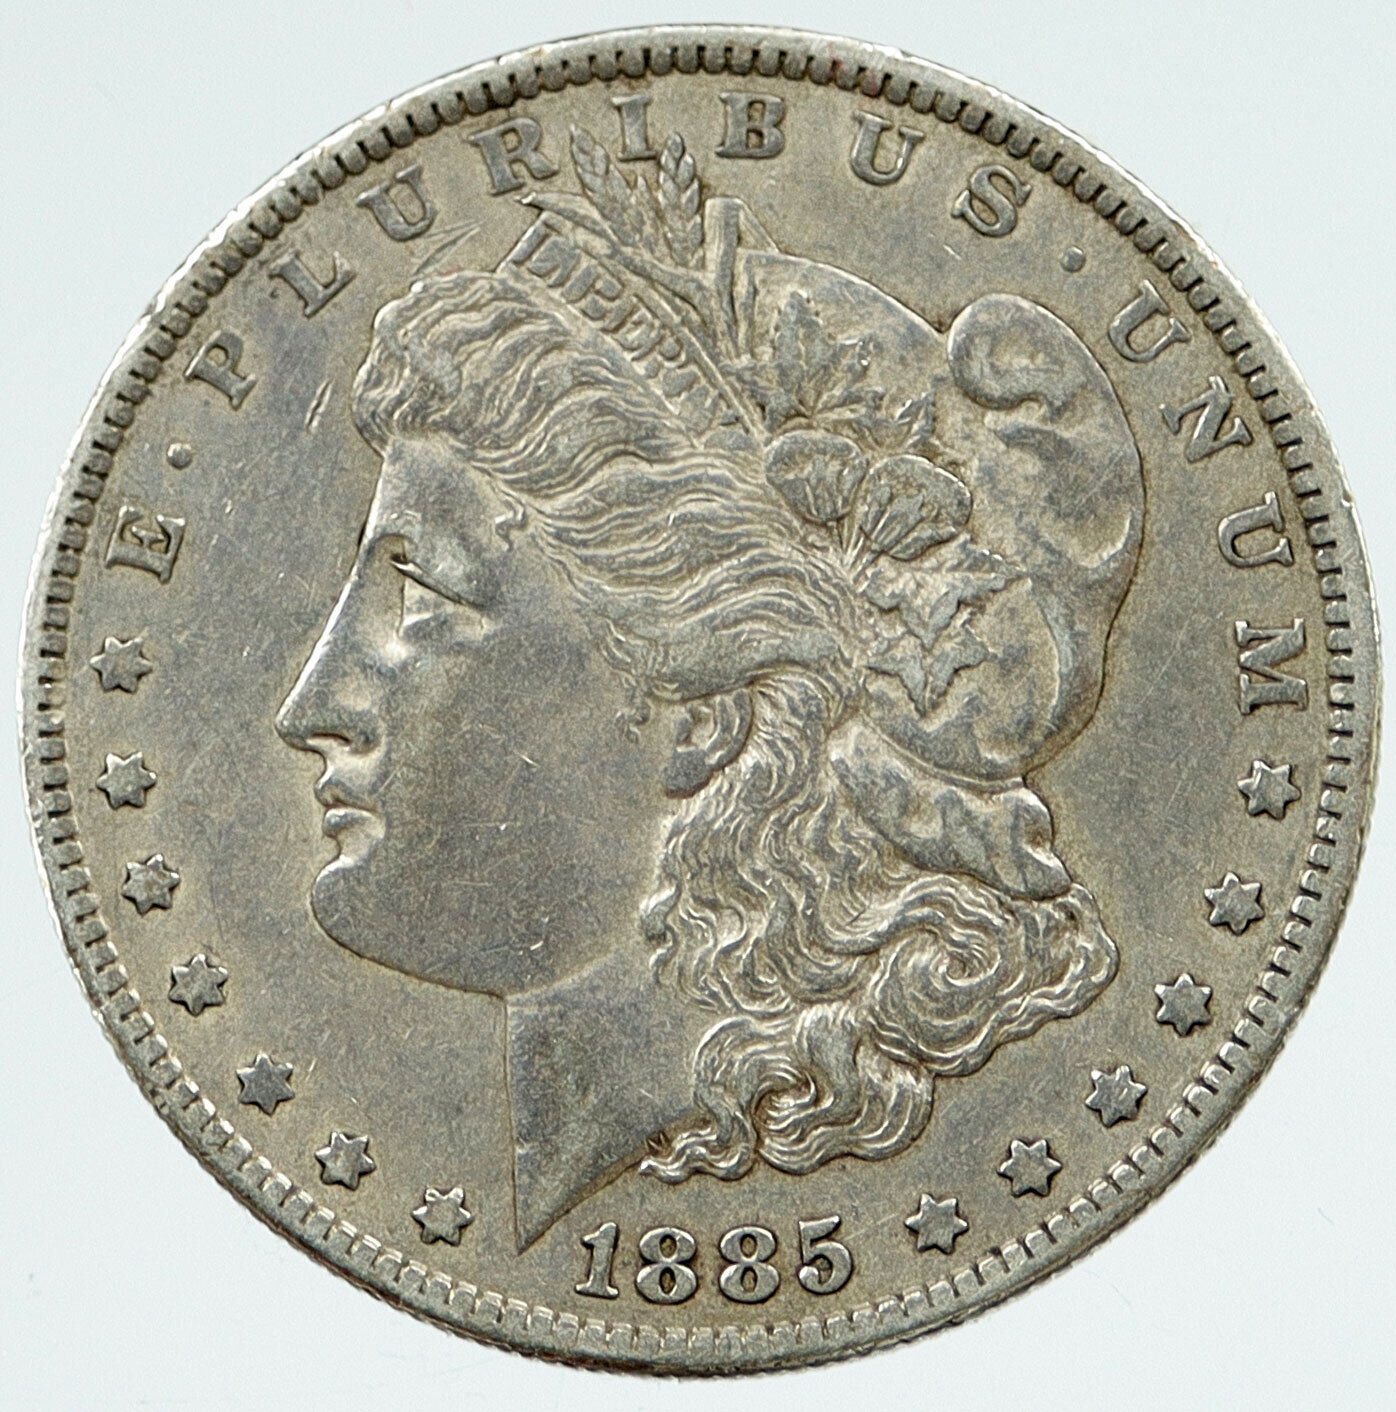 1885 O UNITED STATES of America EAGLE Old SILVER Morgan US Dollar Coin i117130